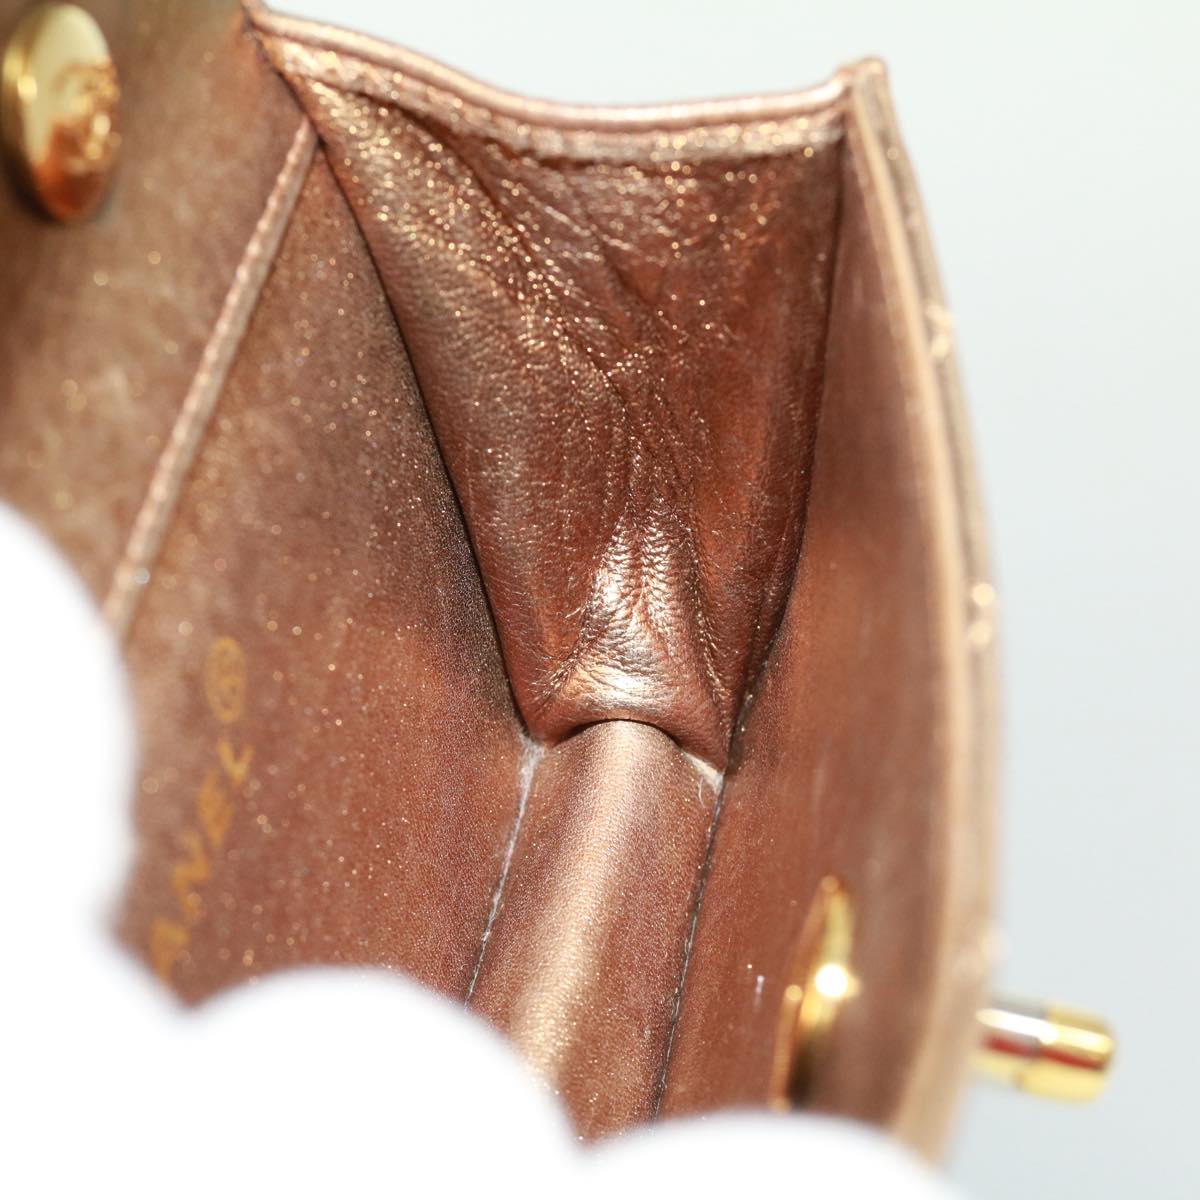 CHANEL Chain Turn Lock Mini Matelasse Shoulder Bag Lamb Skin Gold CC Auth 32696A